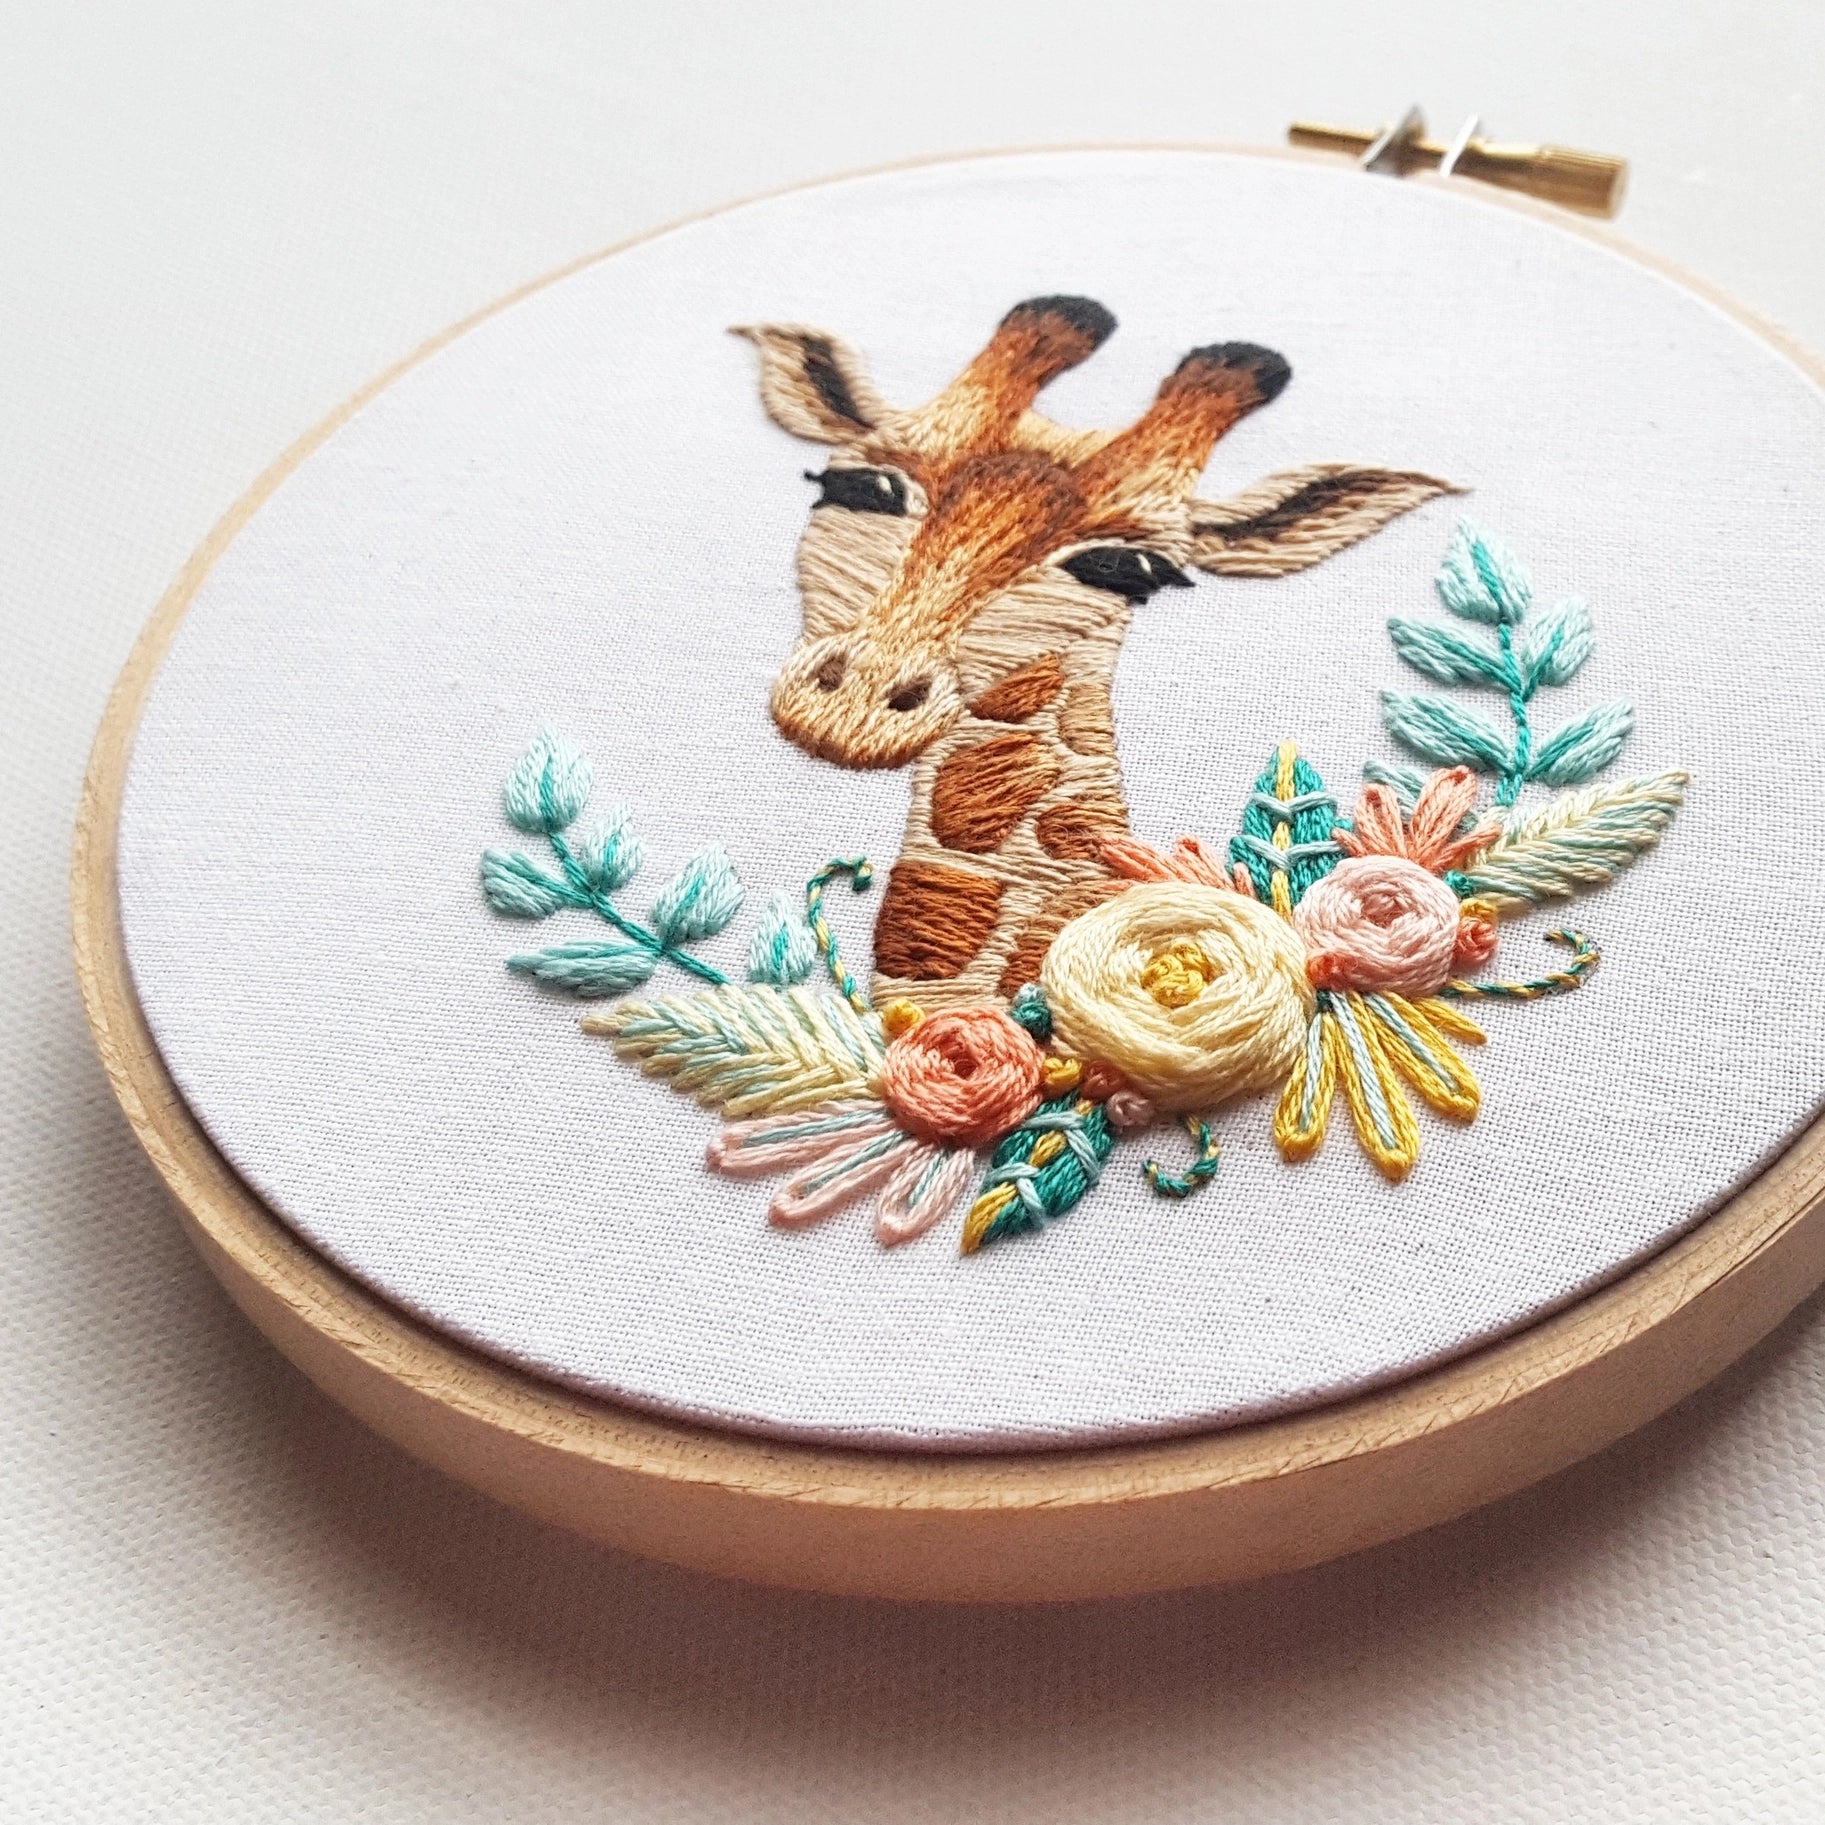 Giraffe Embroidery Kit